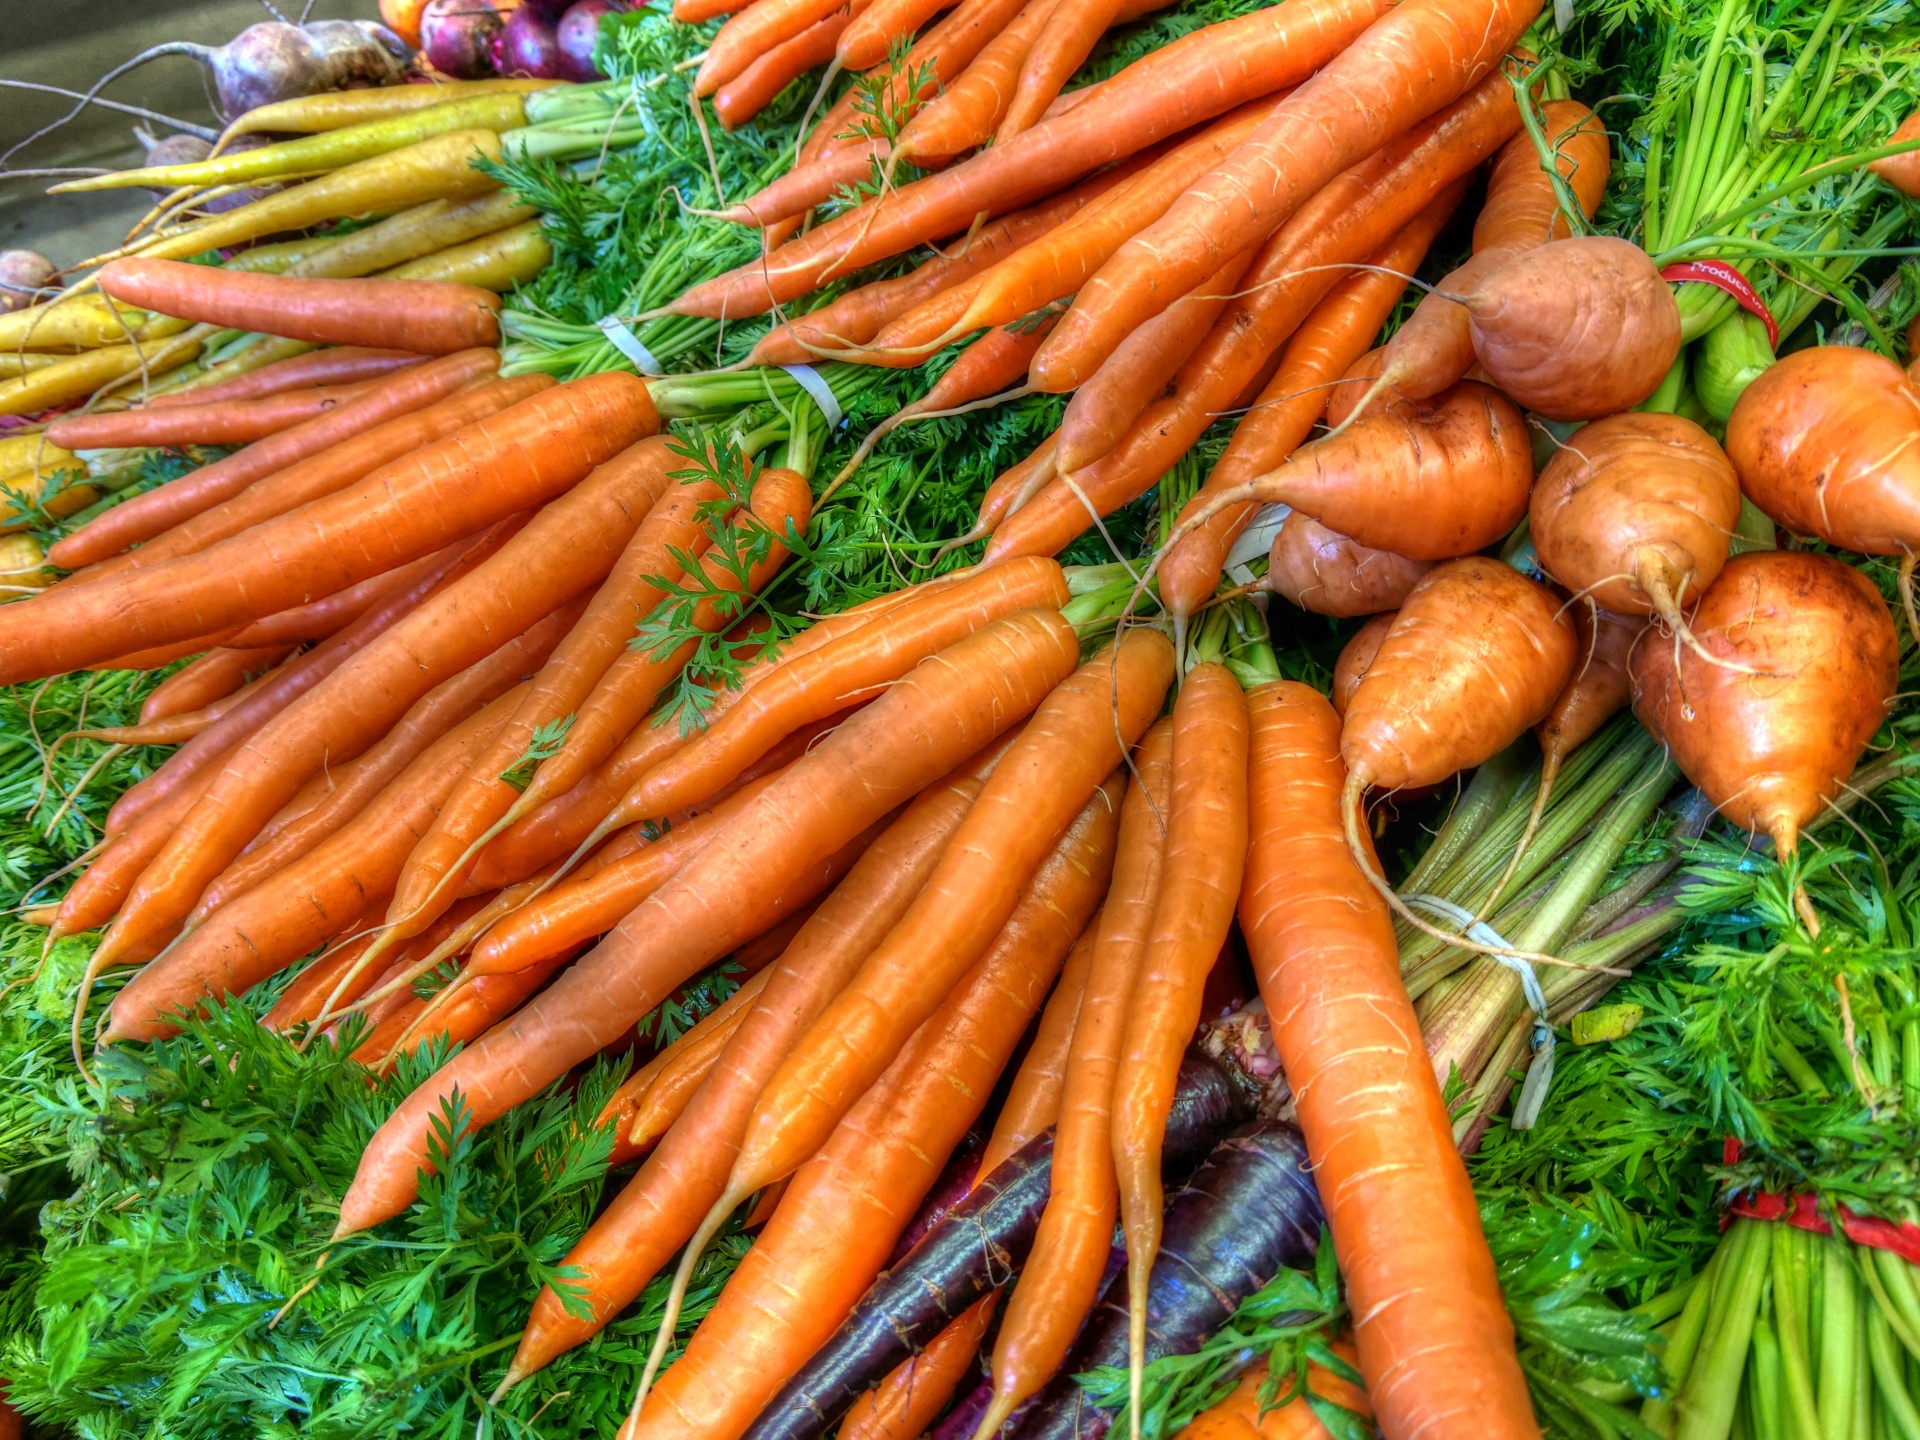 Download free photo of Carrot,šargarepe,vegetable,vegan,health - from needpix.com